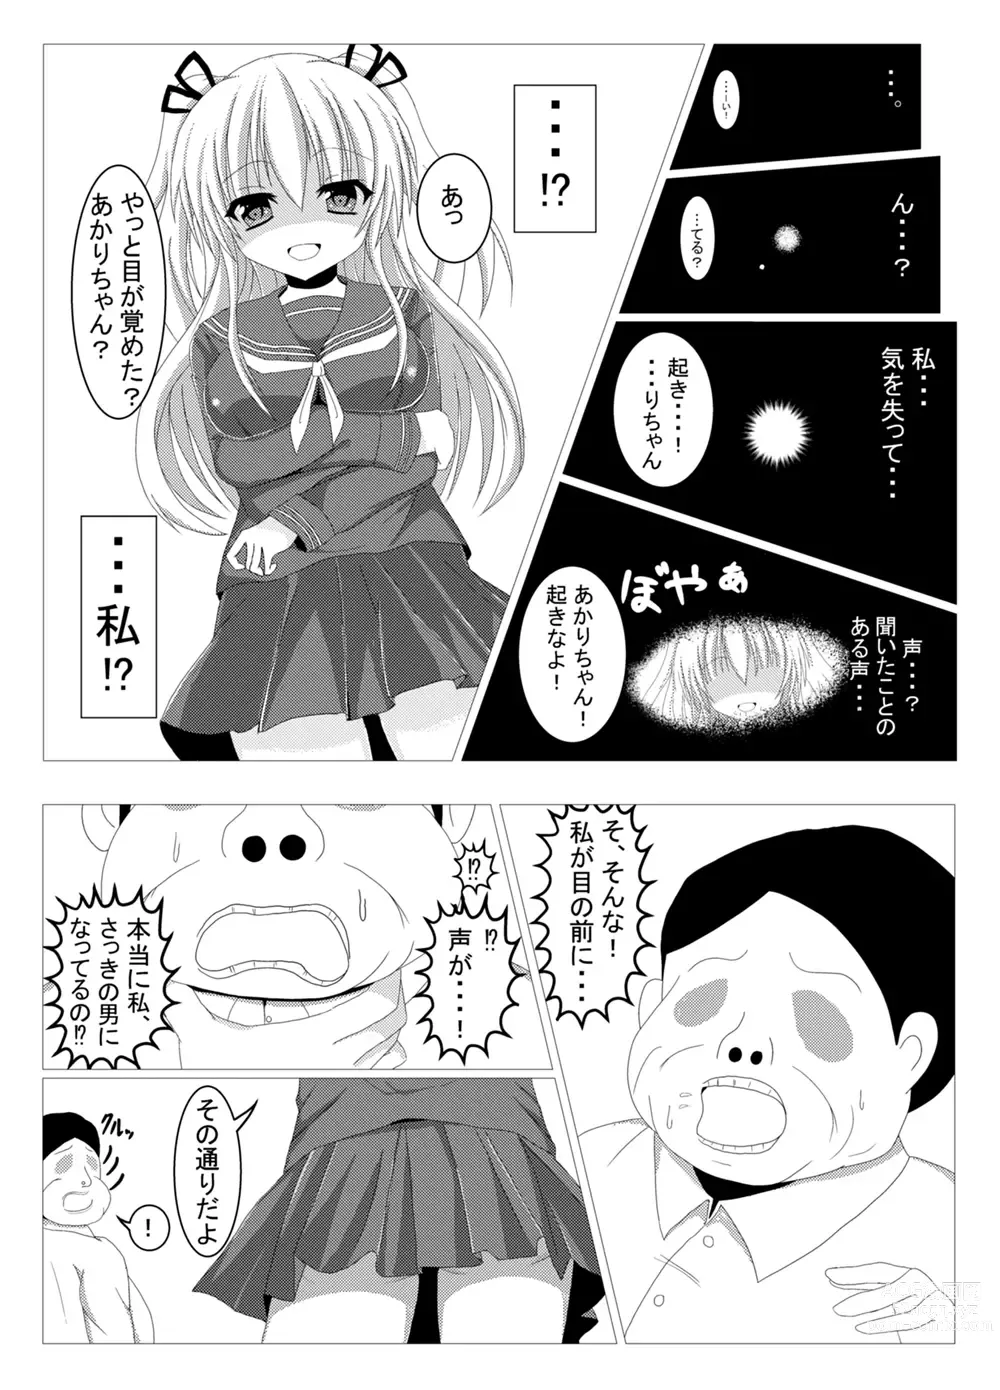 Page 32 of doujinshi Tanano Omochi no Manga